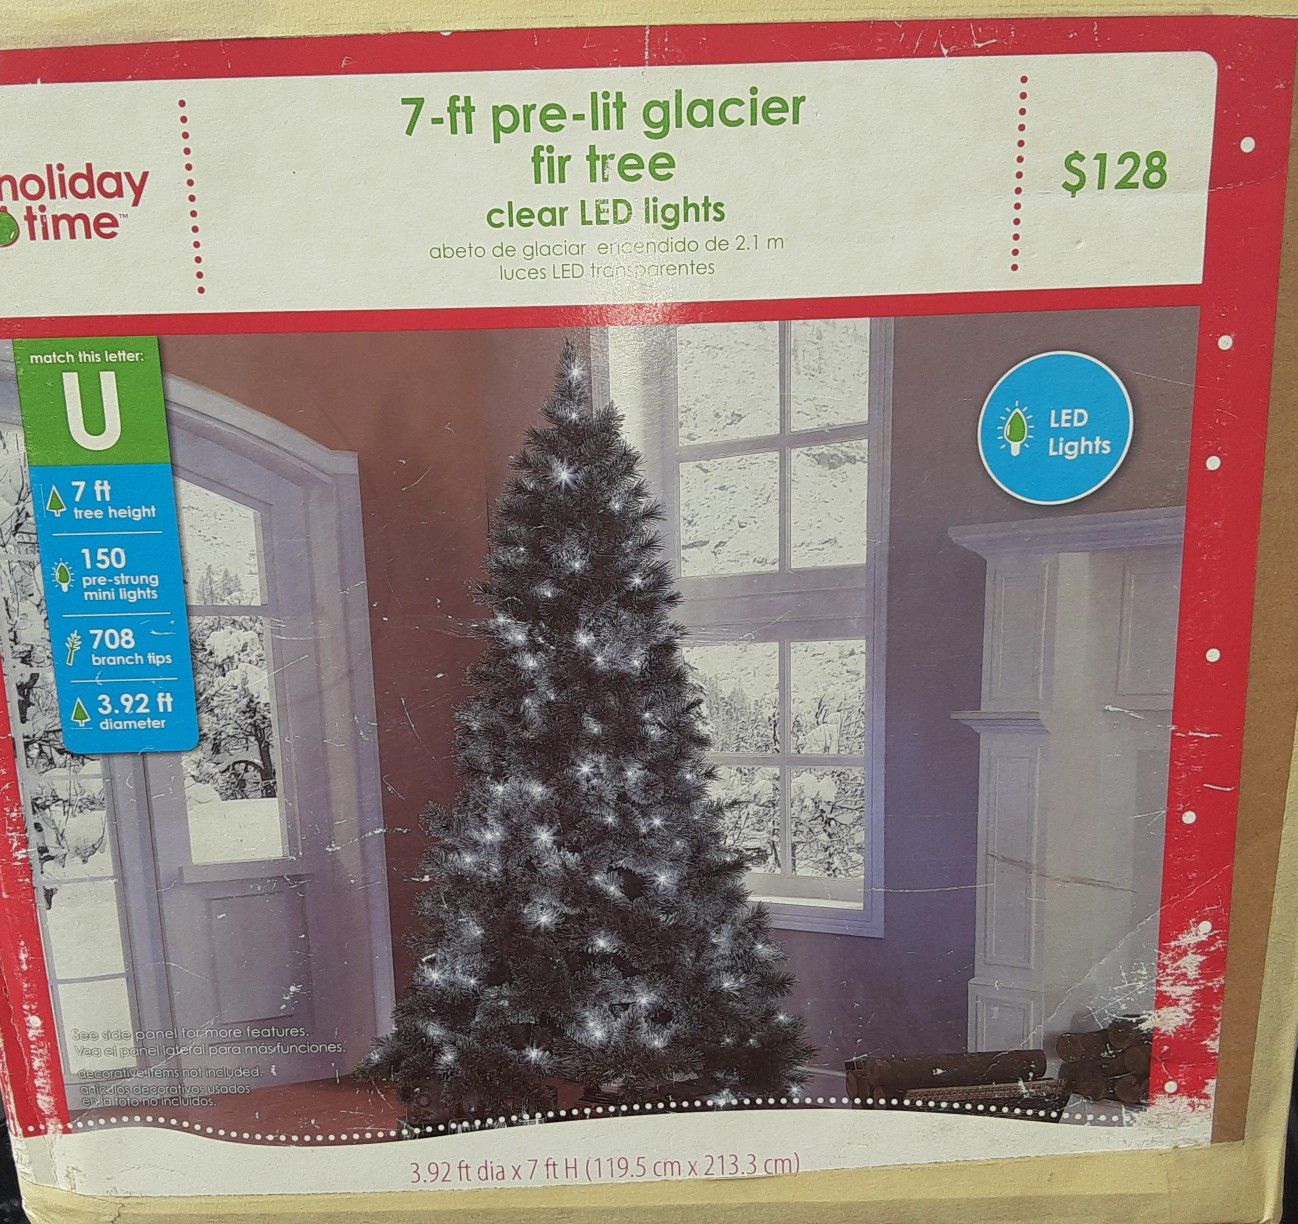 7ft pre-lit glacier Christmas Tree